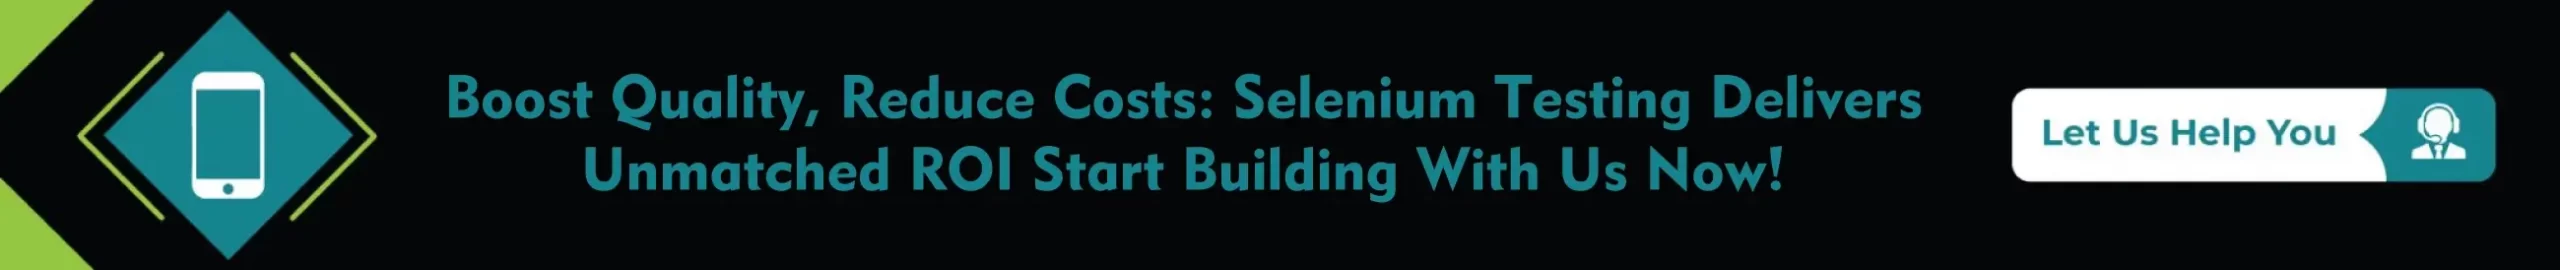 selenium-cloud-services-cta